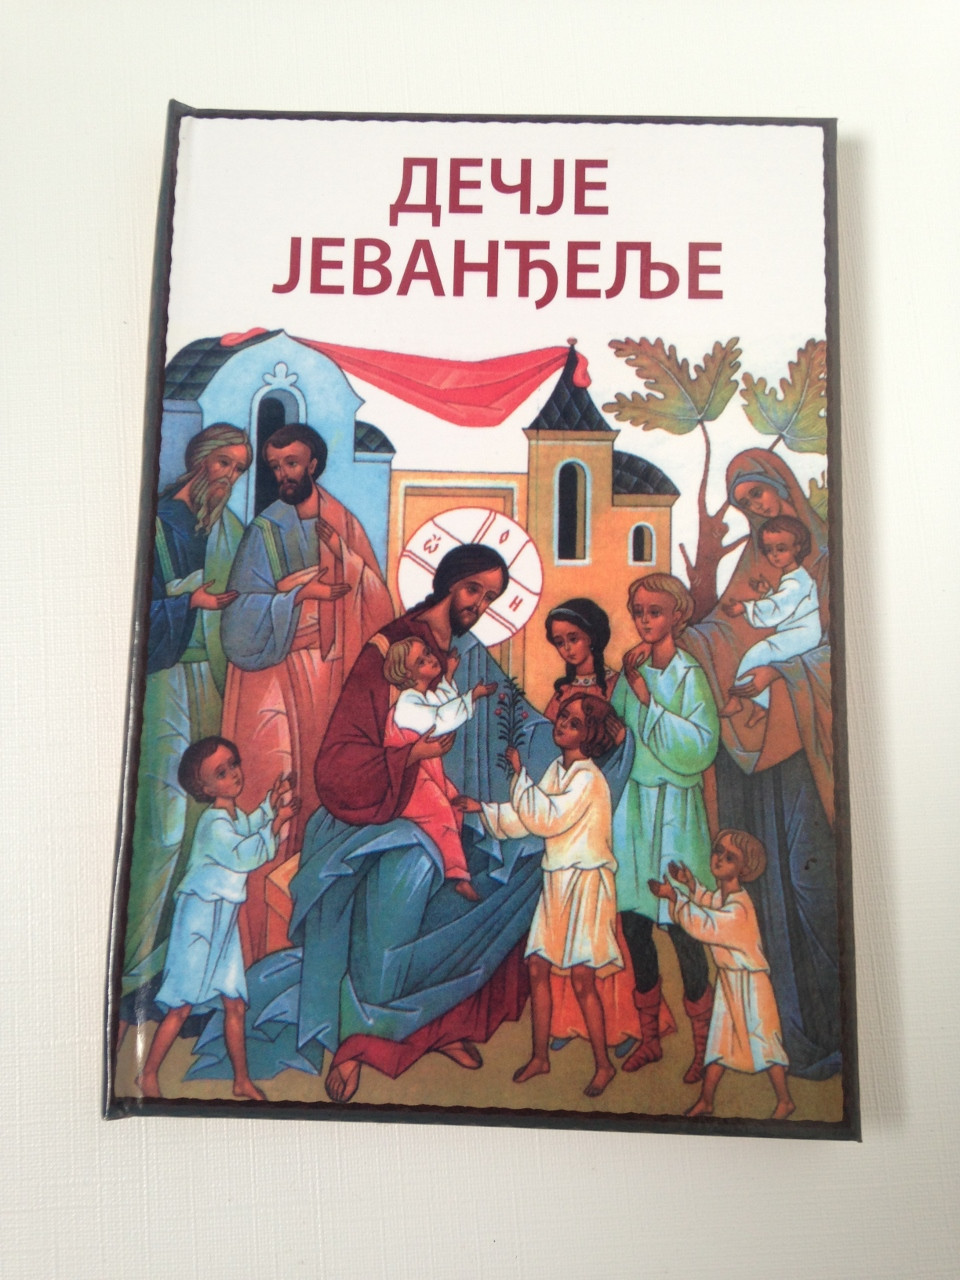 Serbian Orthodox Illustrated Children's Gospel Book / Дечје Јеванђеље -  Dečje Jevanđelje / Let the Little Children Come - bibleinmylanguage